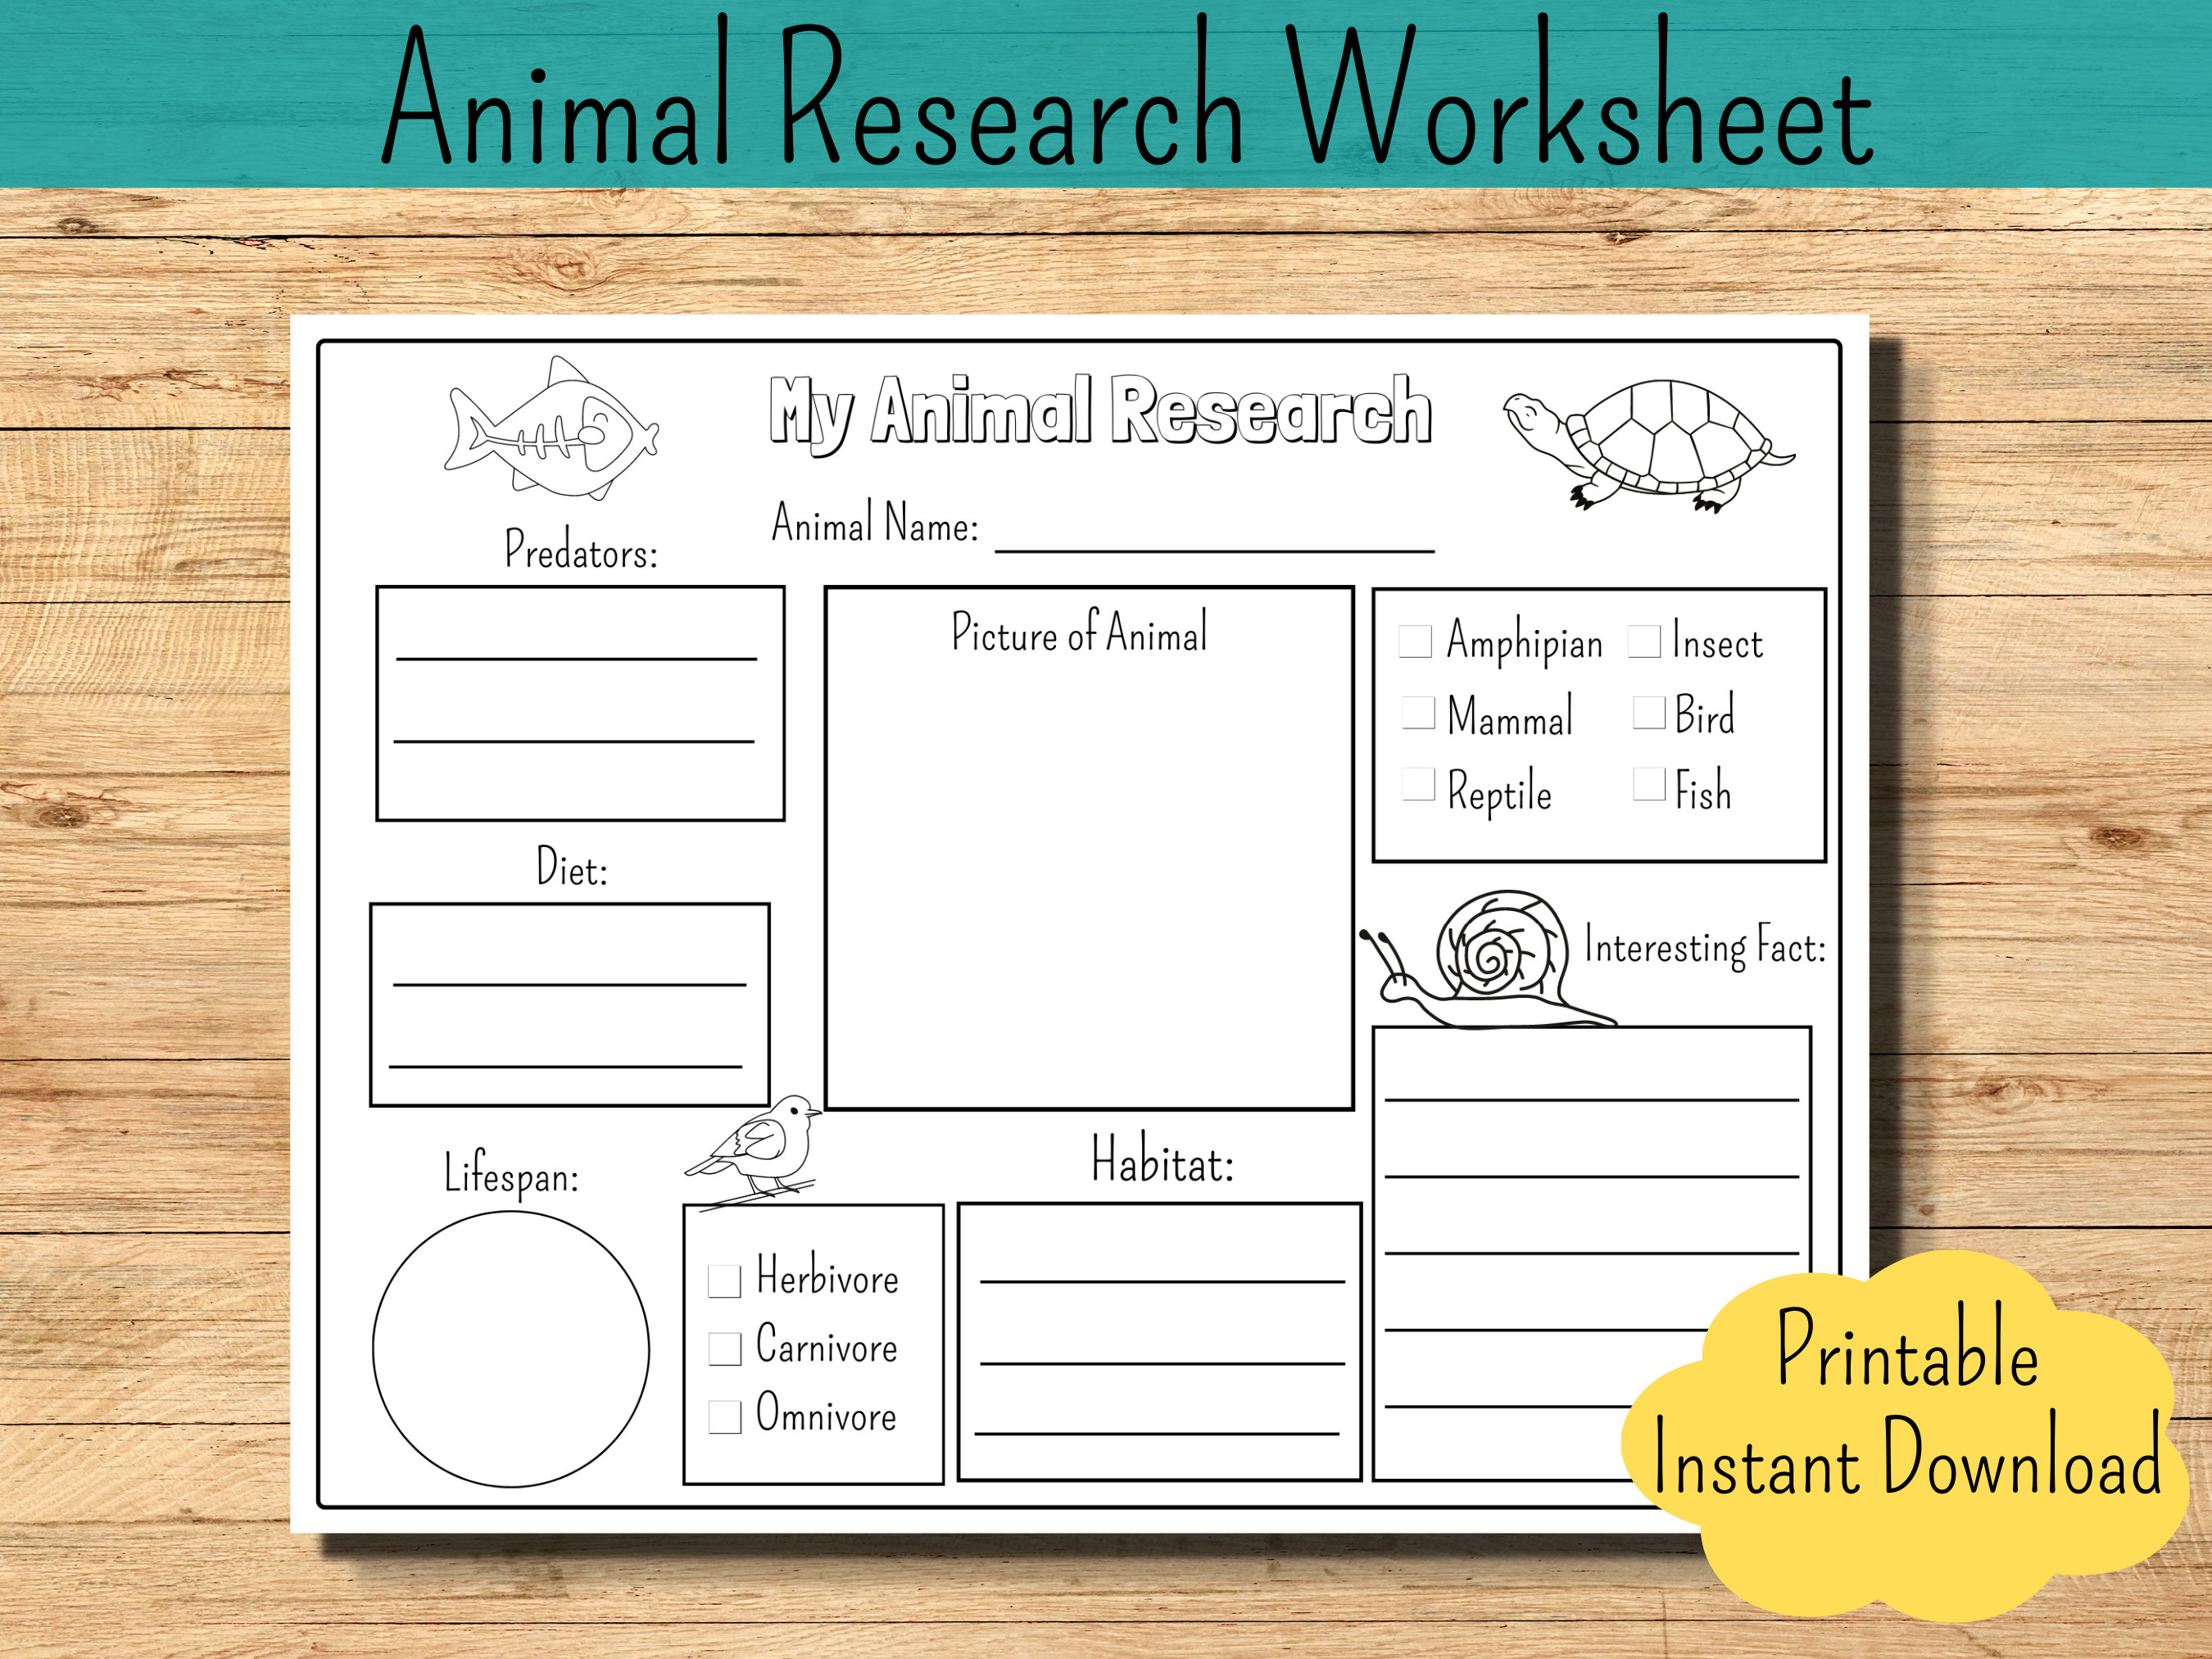 Animal Research Worksheet Printable PDF Instant Download - Etsy